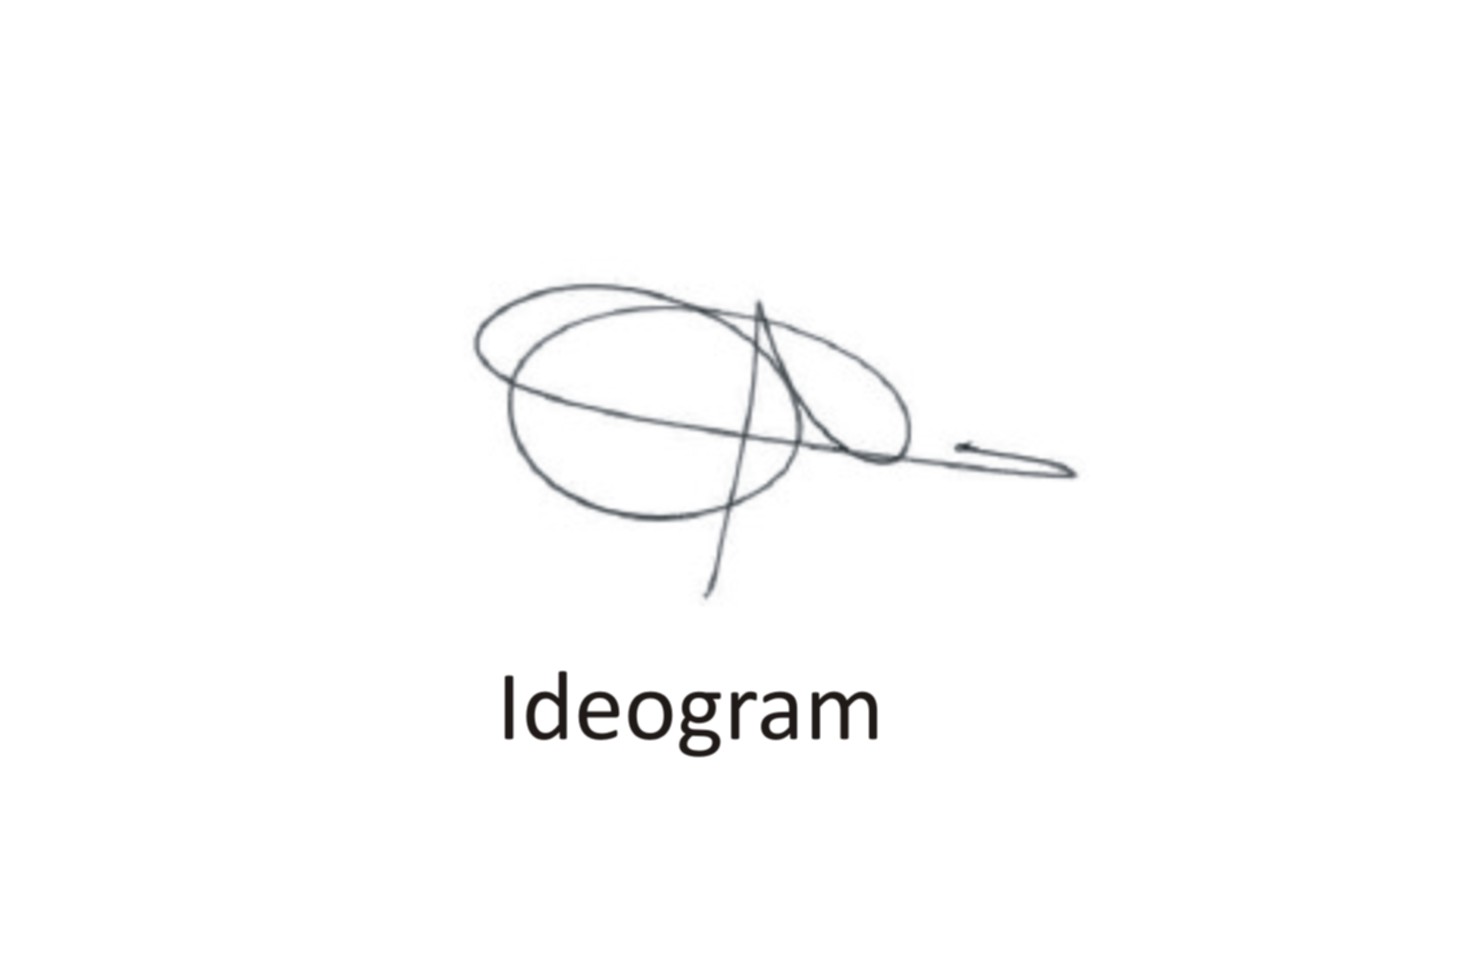 Ideogram example?